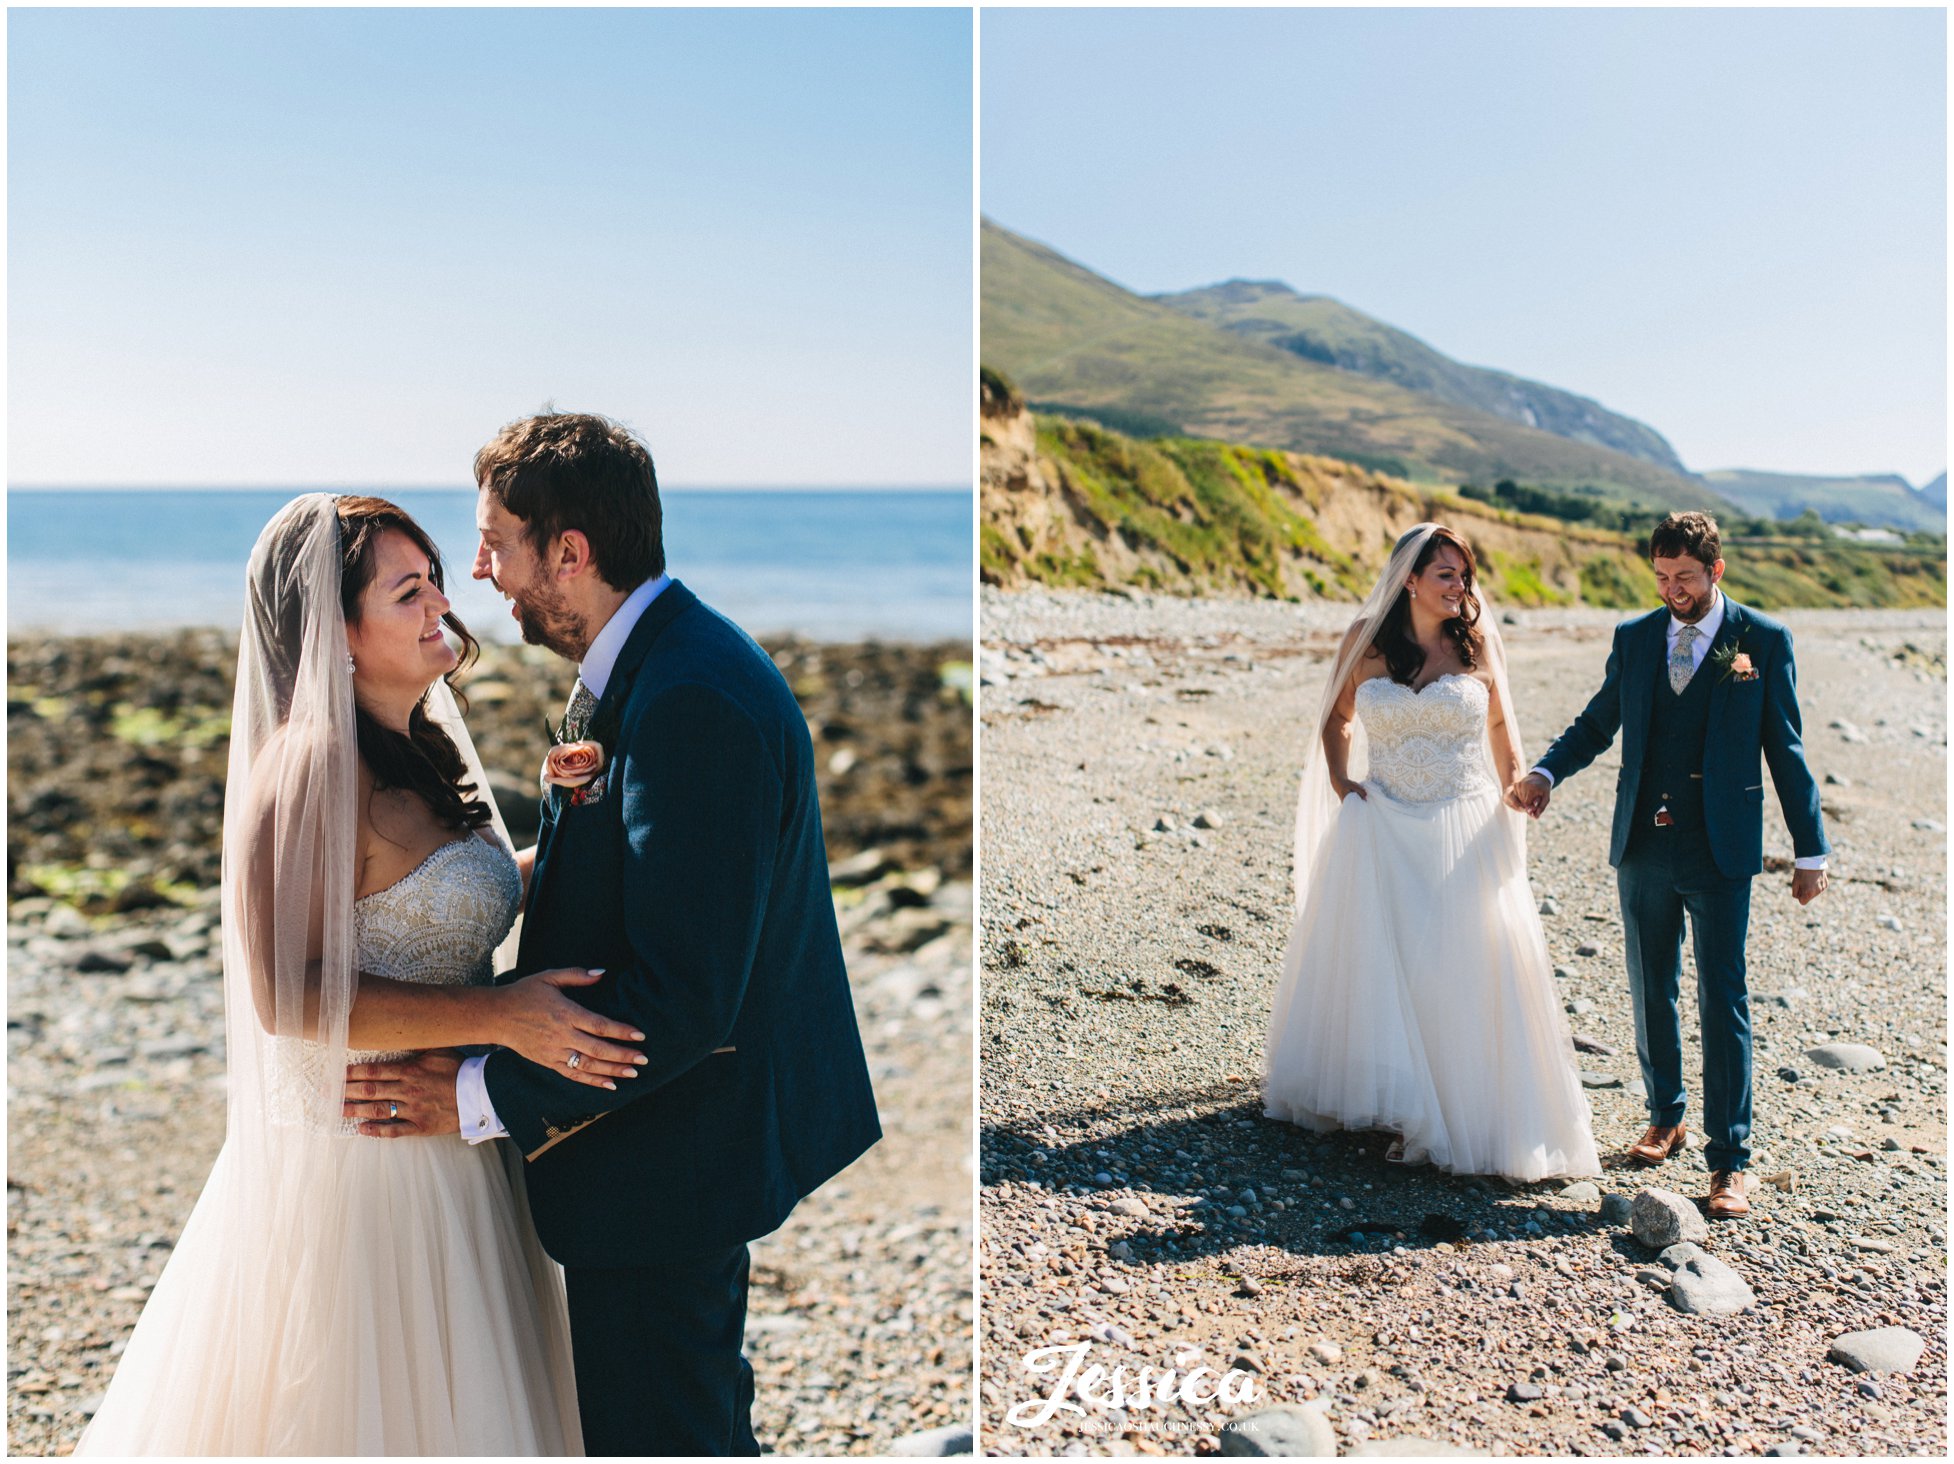 the couple enjoy the sun on Caernarfon bay at their bach wen wedding